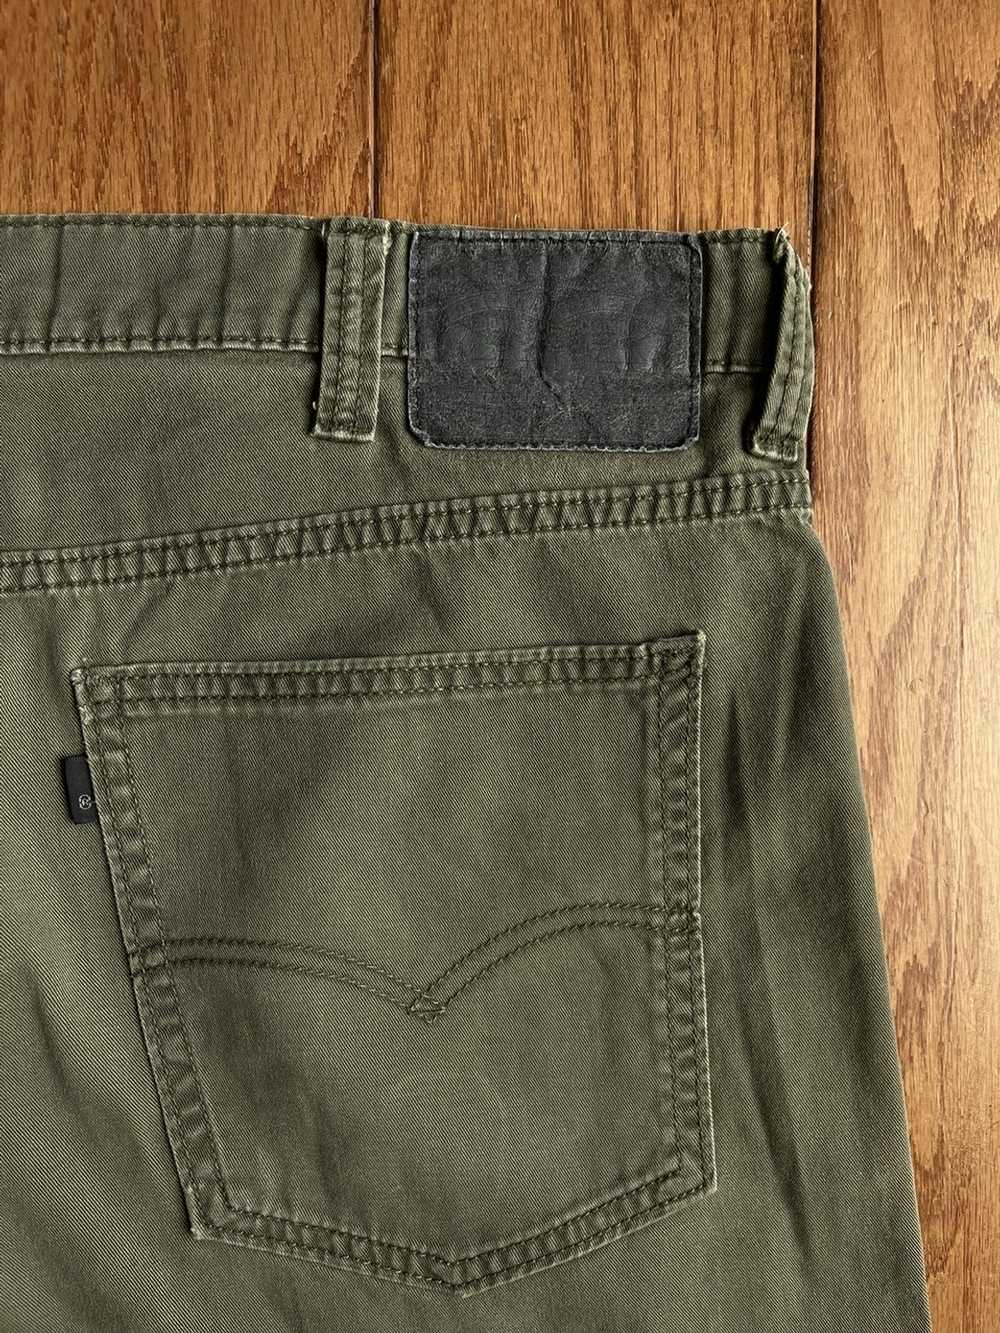 Levi's Levi's 508 Chino Pants - image 3